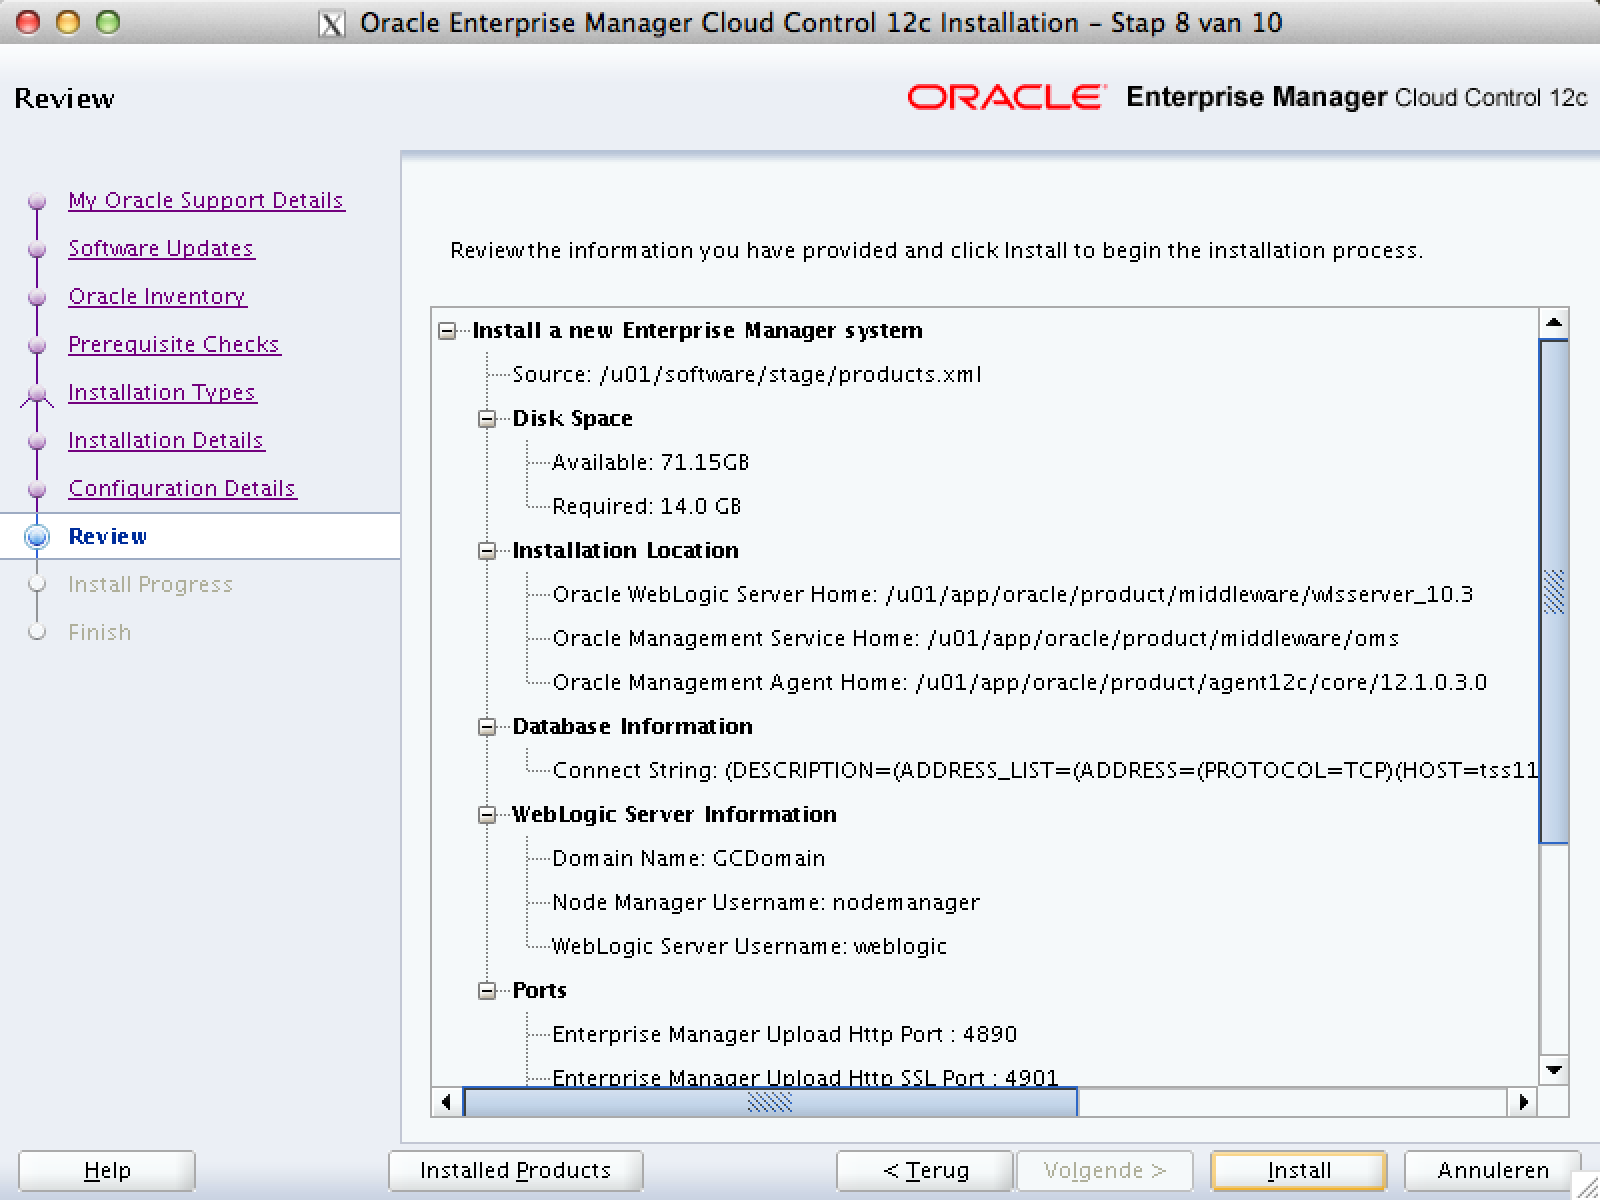 Installation Enterprise Manager Cloud Control 12c Release 3 12.1.0.3